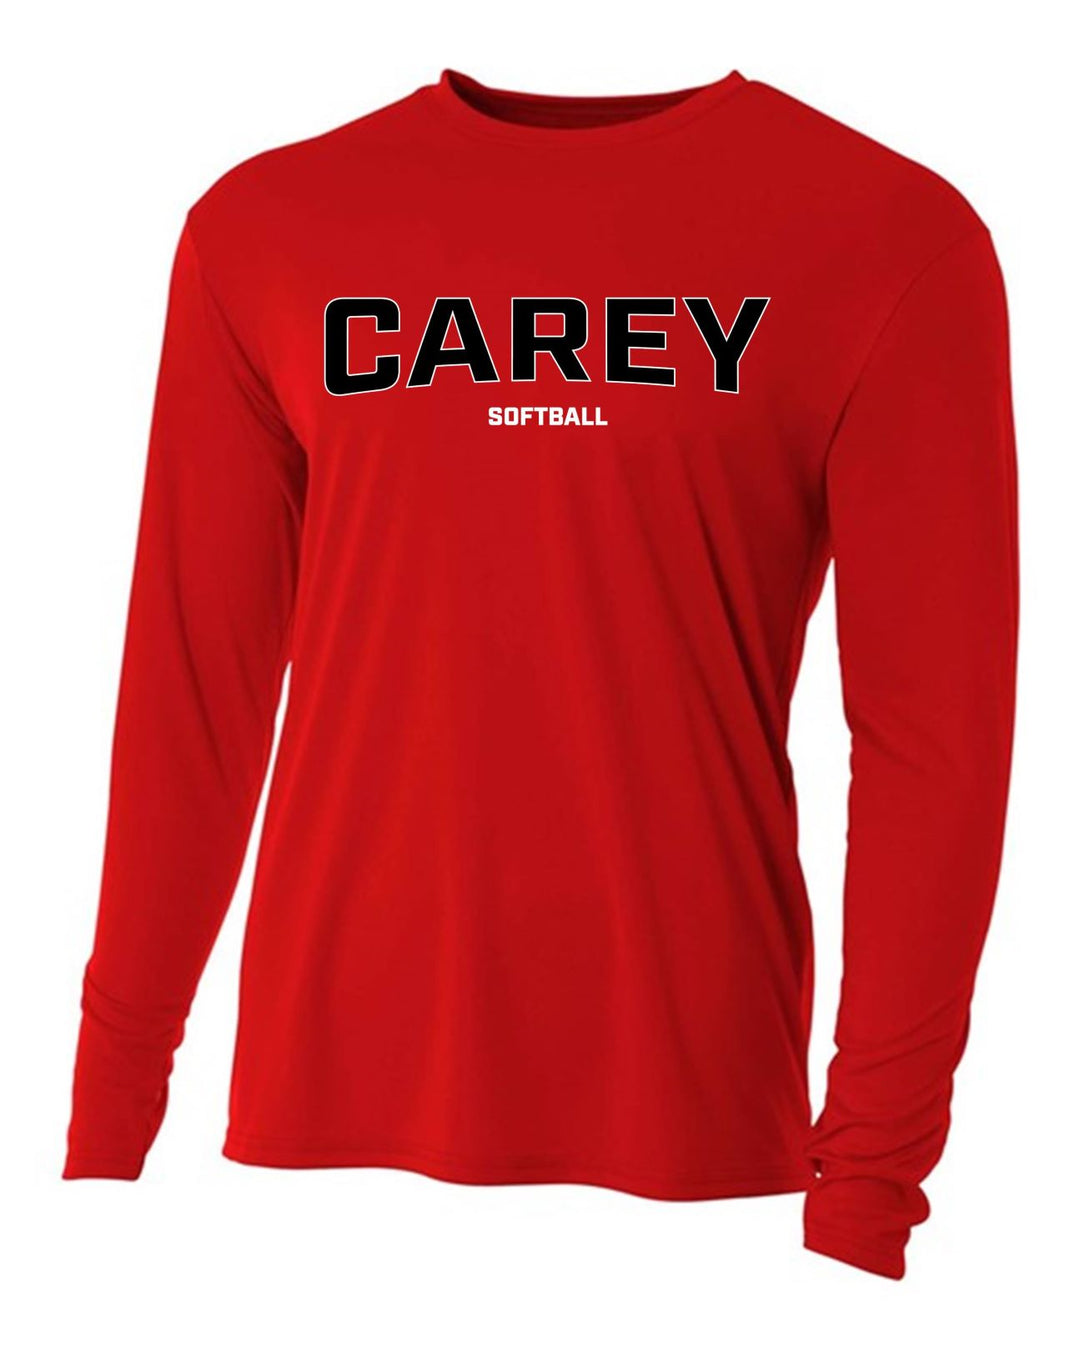 WCU Softball Youth Long-Sleeve Performance Shirt WCU Softball Red CAREY - Third Coast Soccer